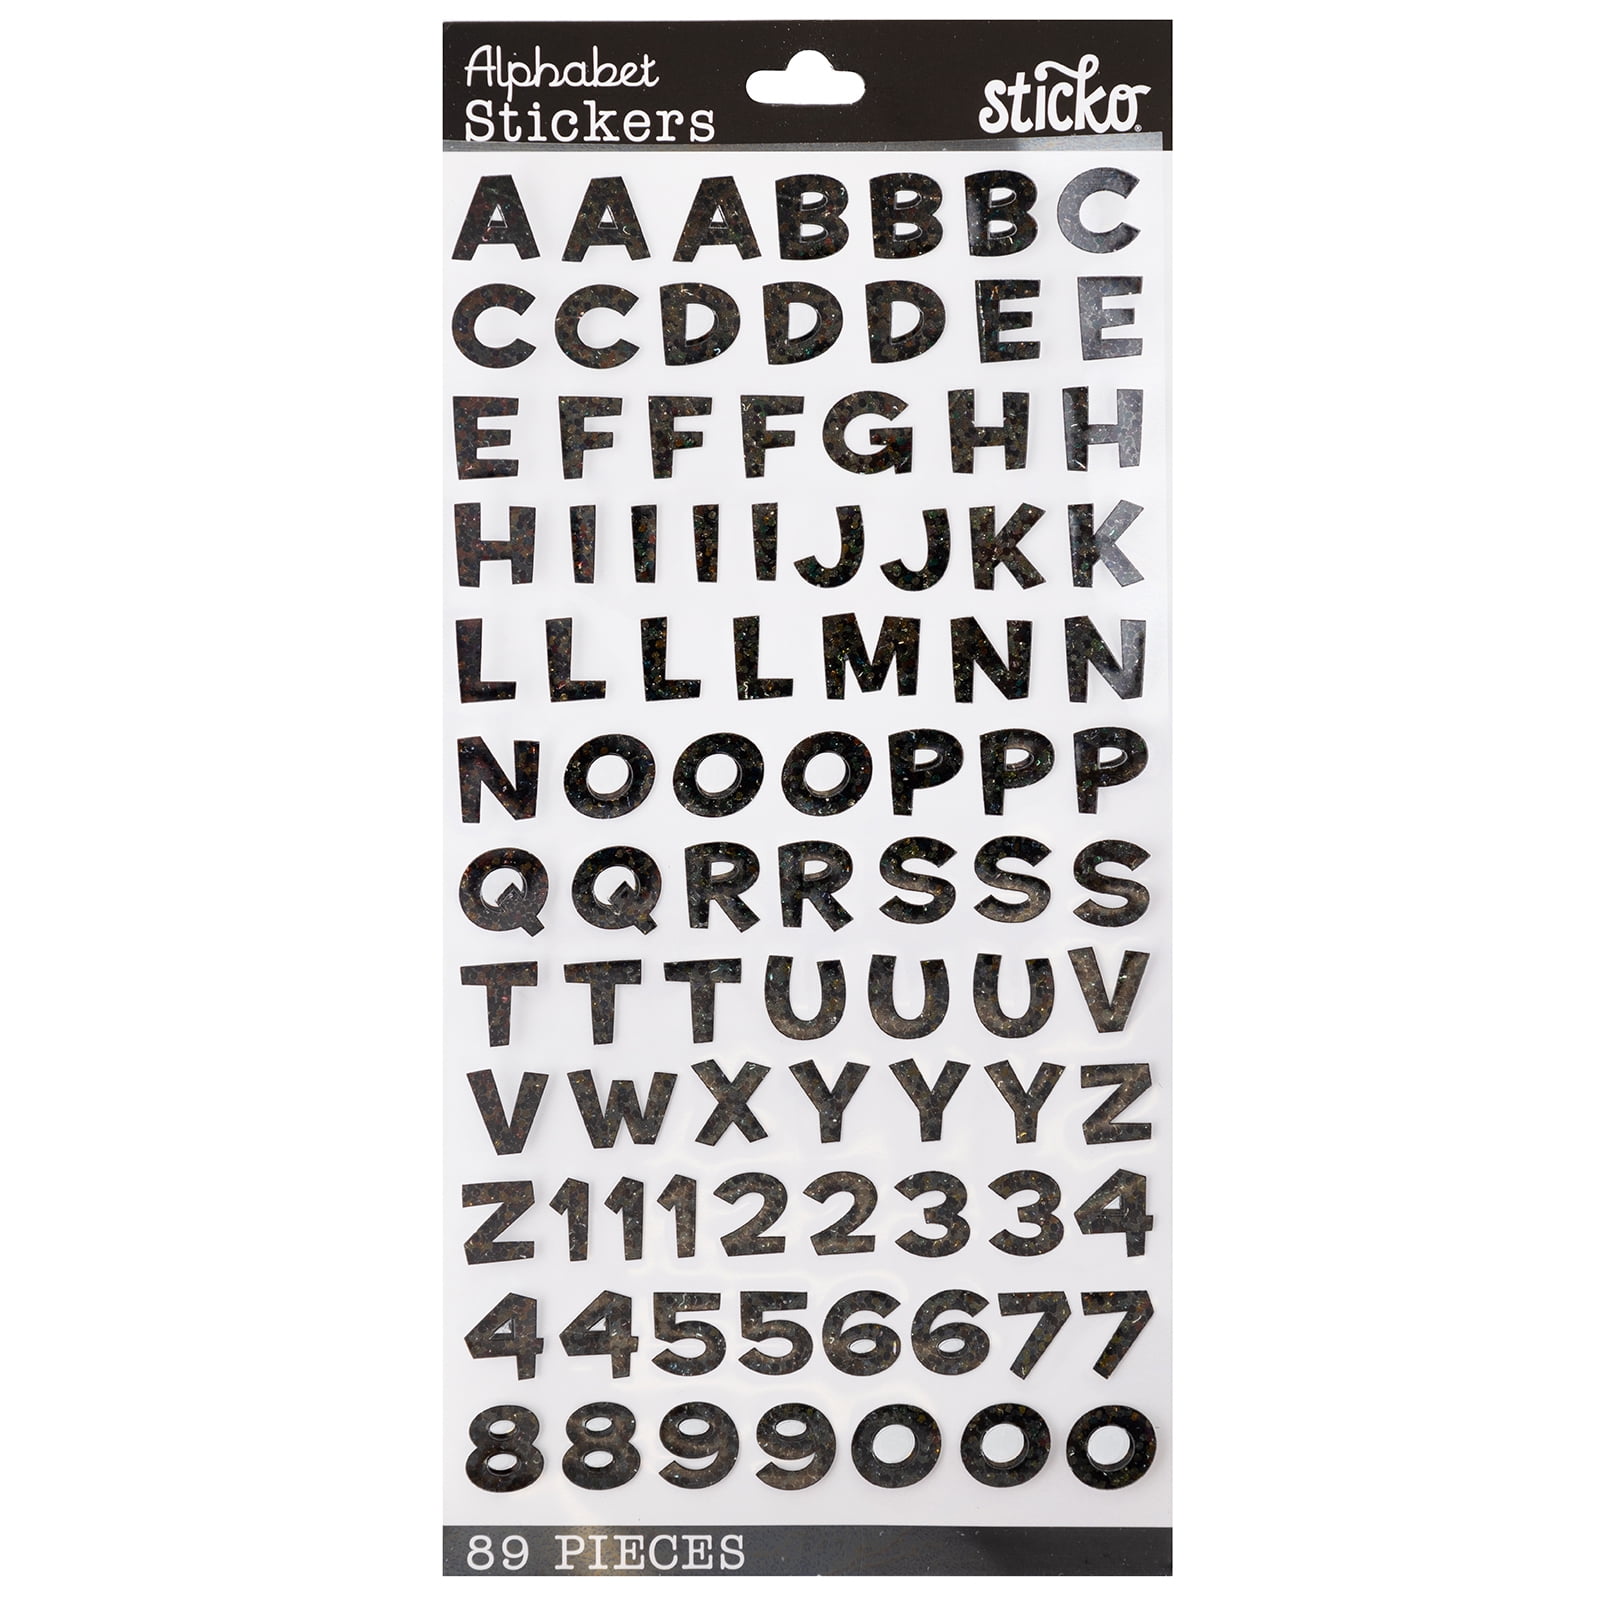 360 Pieces 10 Sheets Vinly Letter Stickers 2 inch Black Alphabet